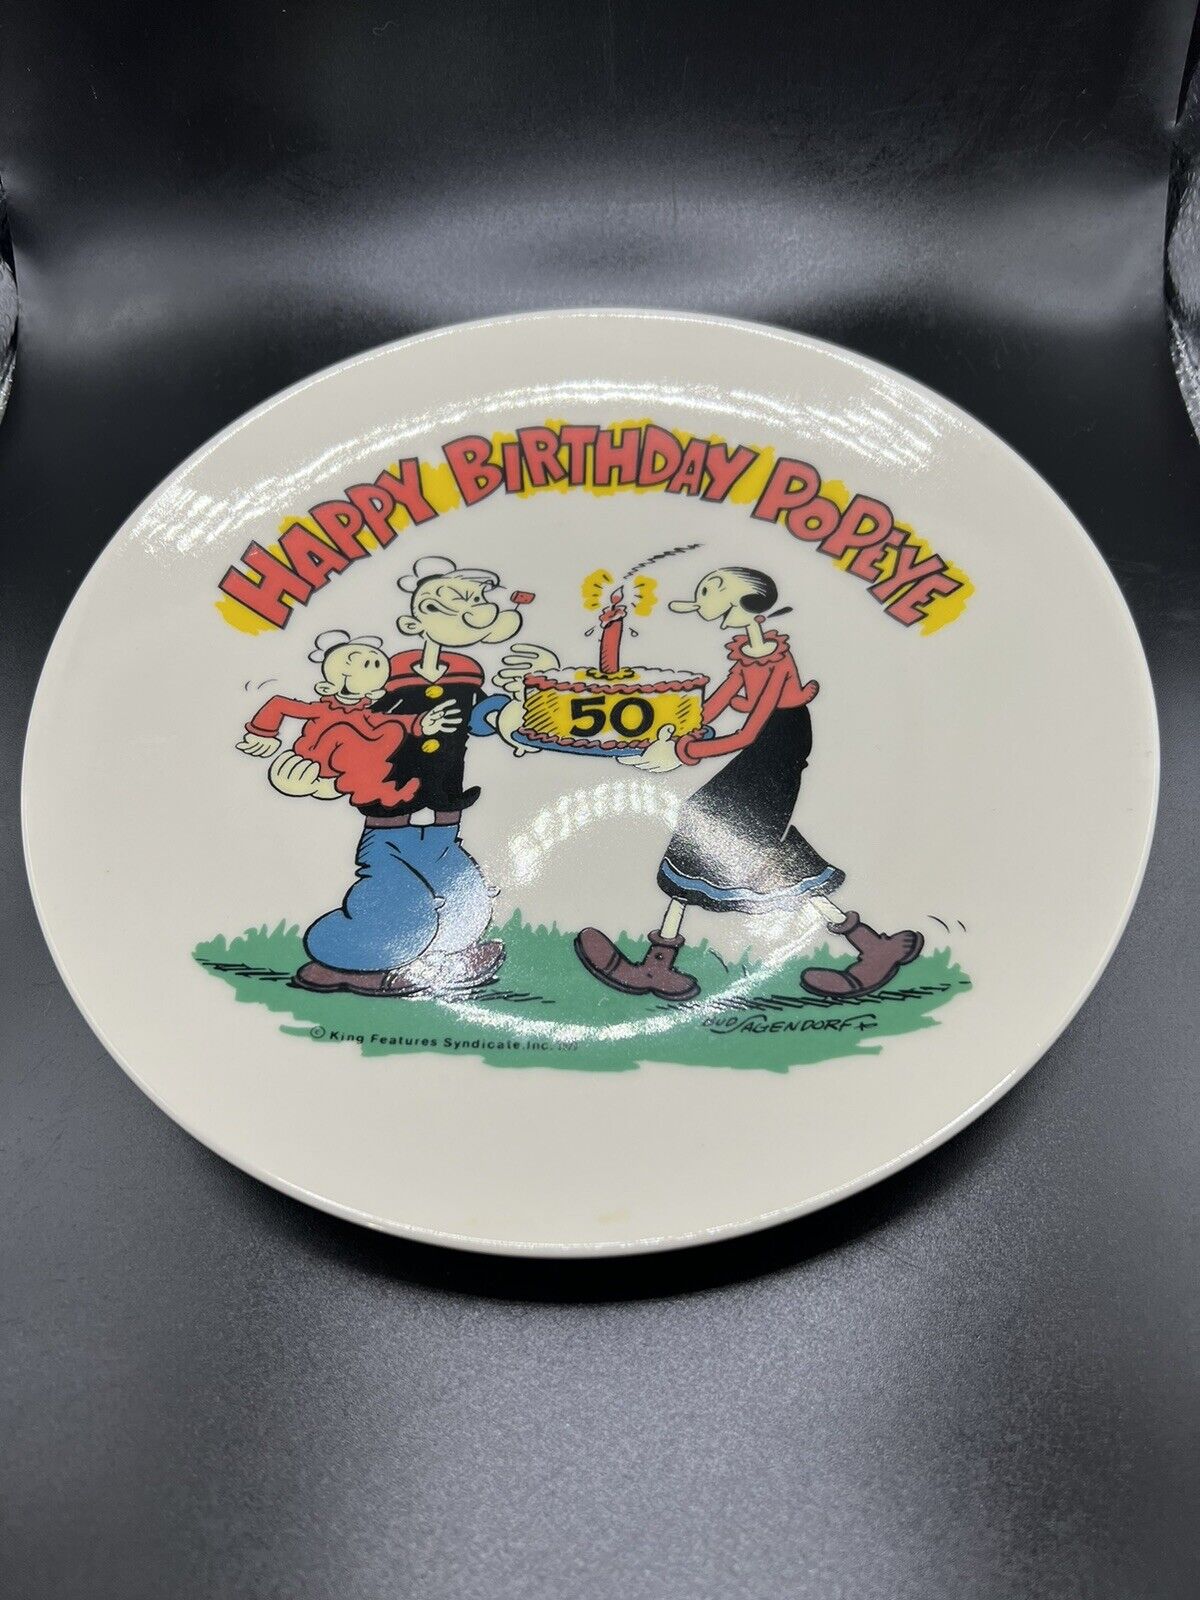 Happy 50th Birthday Popeye Plate # 4769